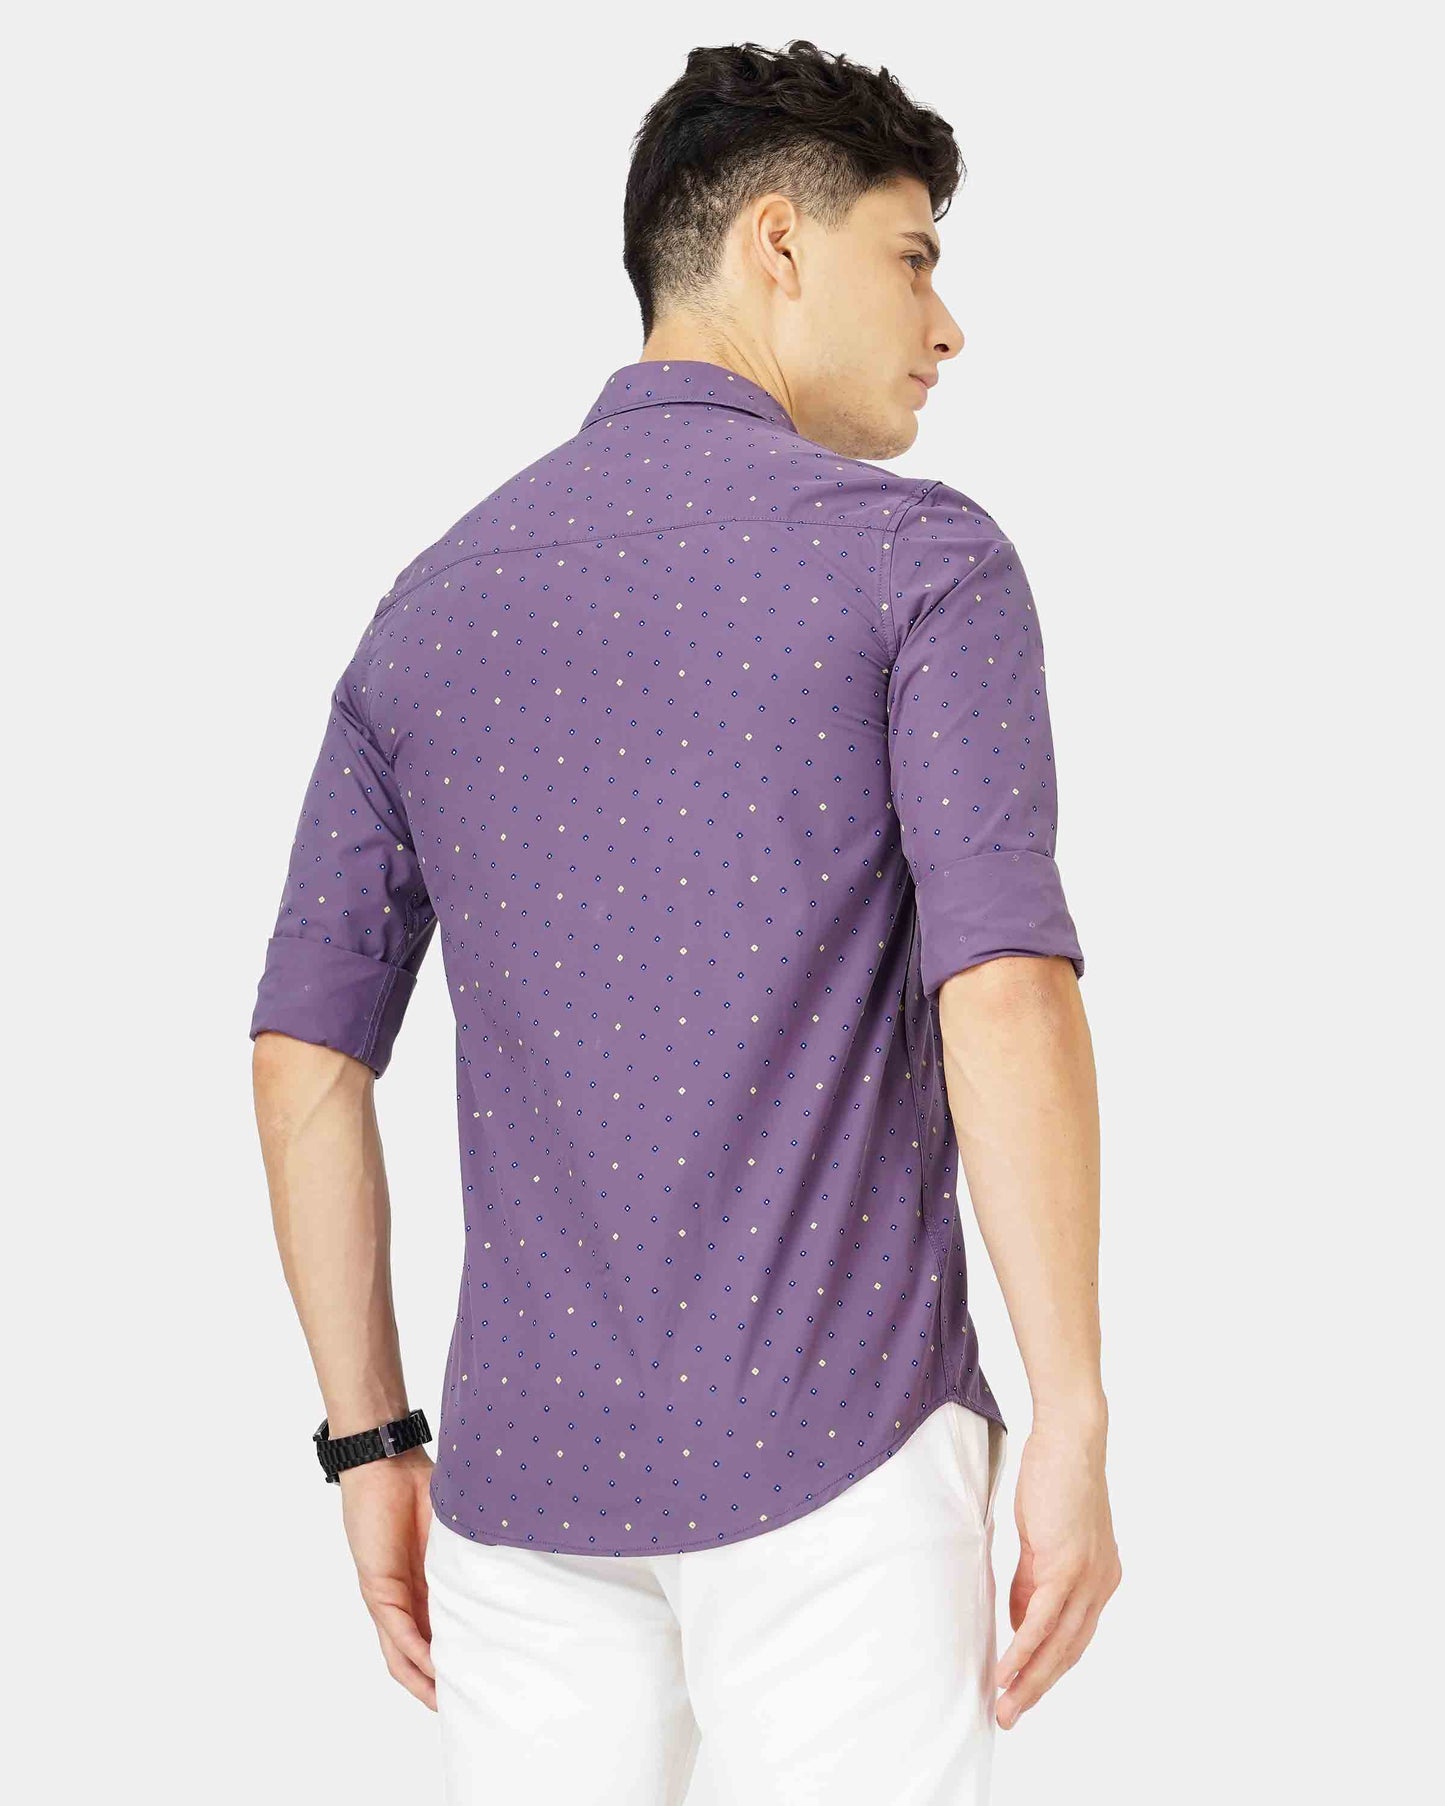 Lavender Polka Dot Printed Shirt